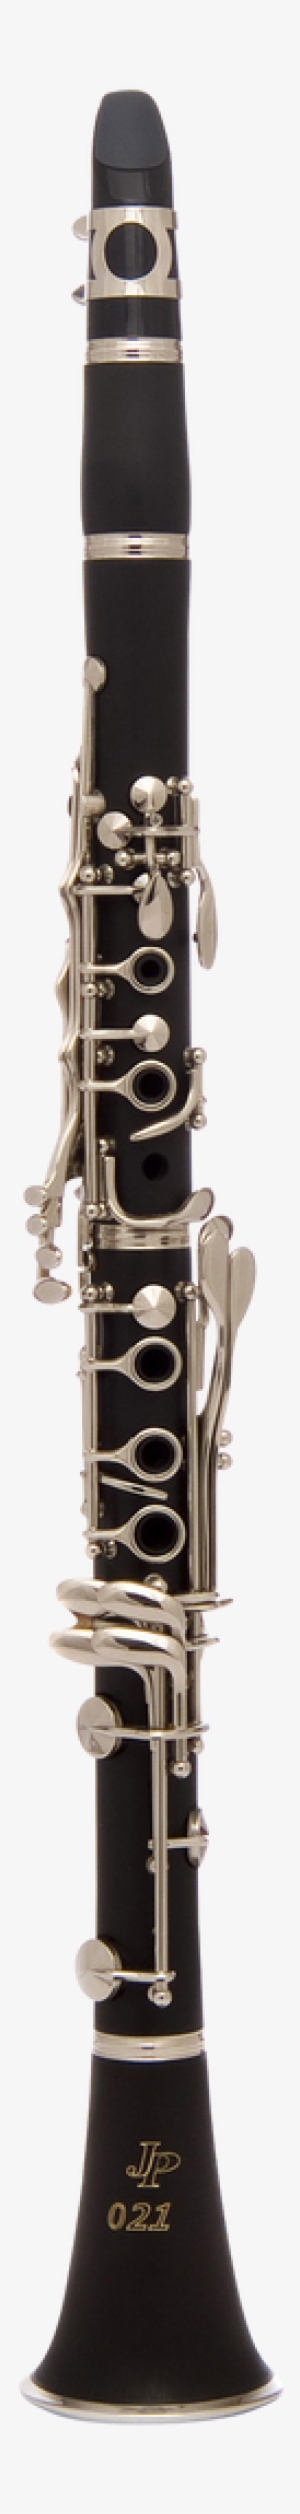 Jp021 Clarinet Cutout - Roy Benson Cb 217